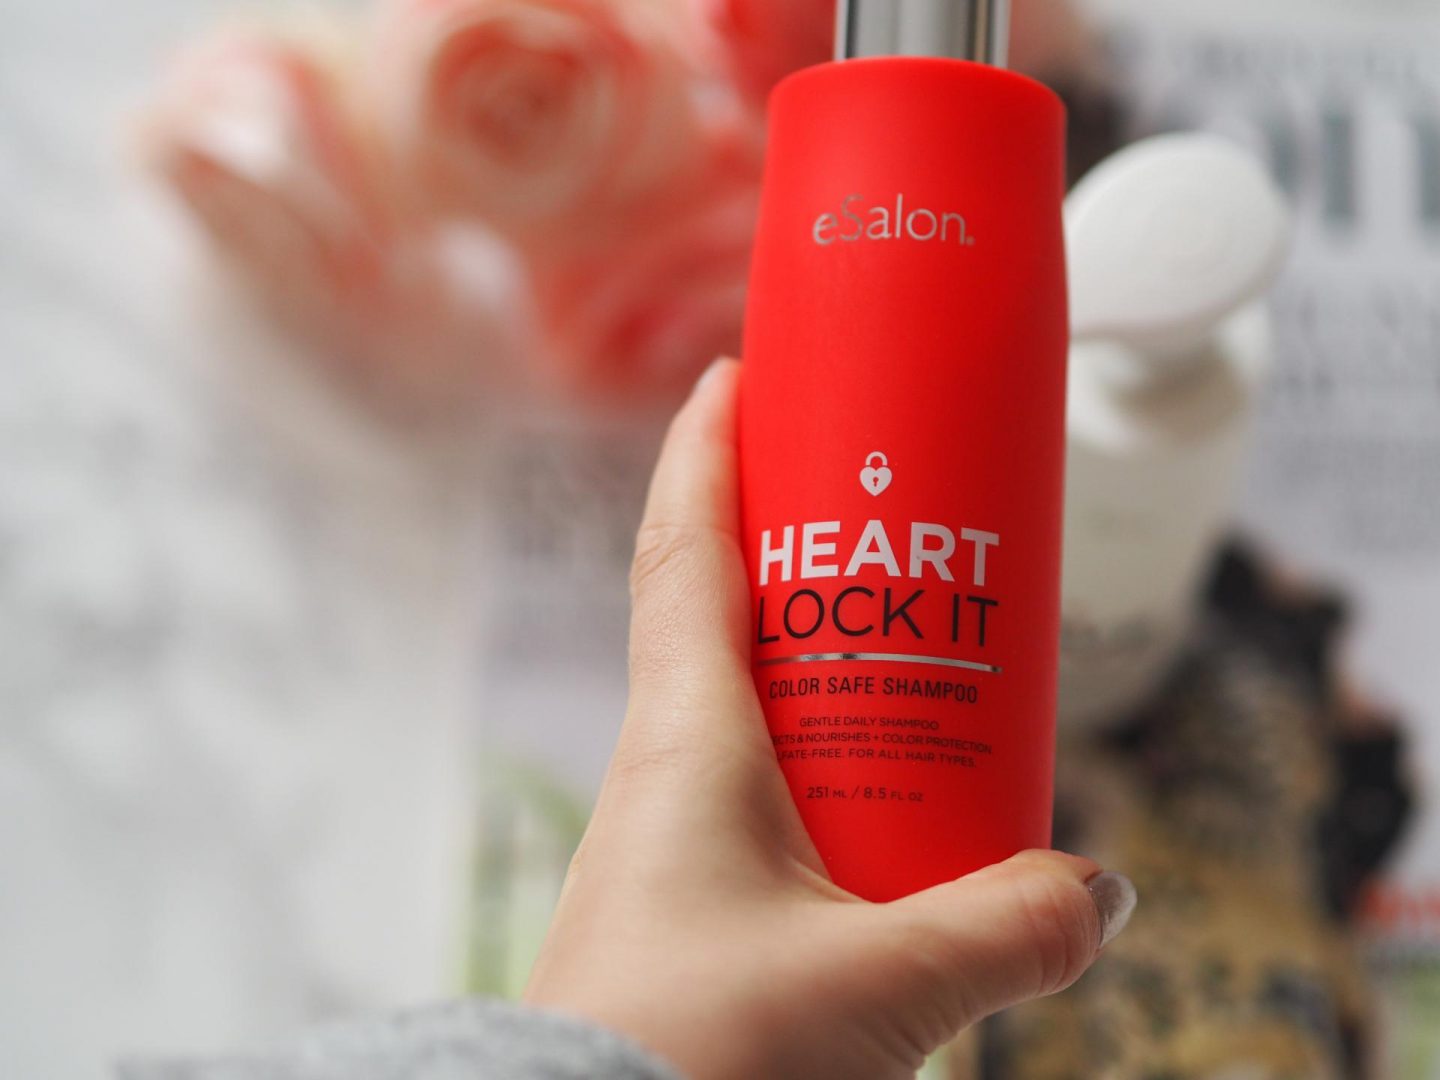 eSalon Heart Lock It Color Safe Shampoo and eSalon Love Unconditionally Color Safe Conditioner